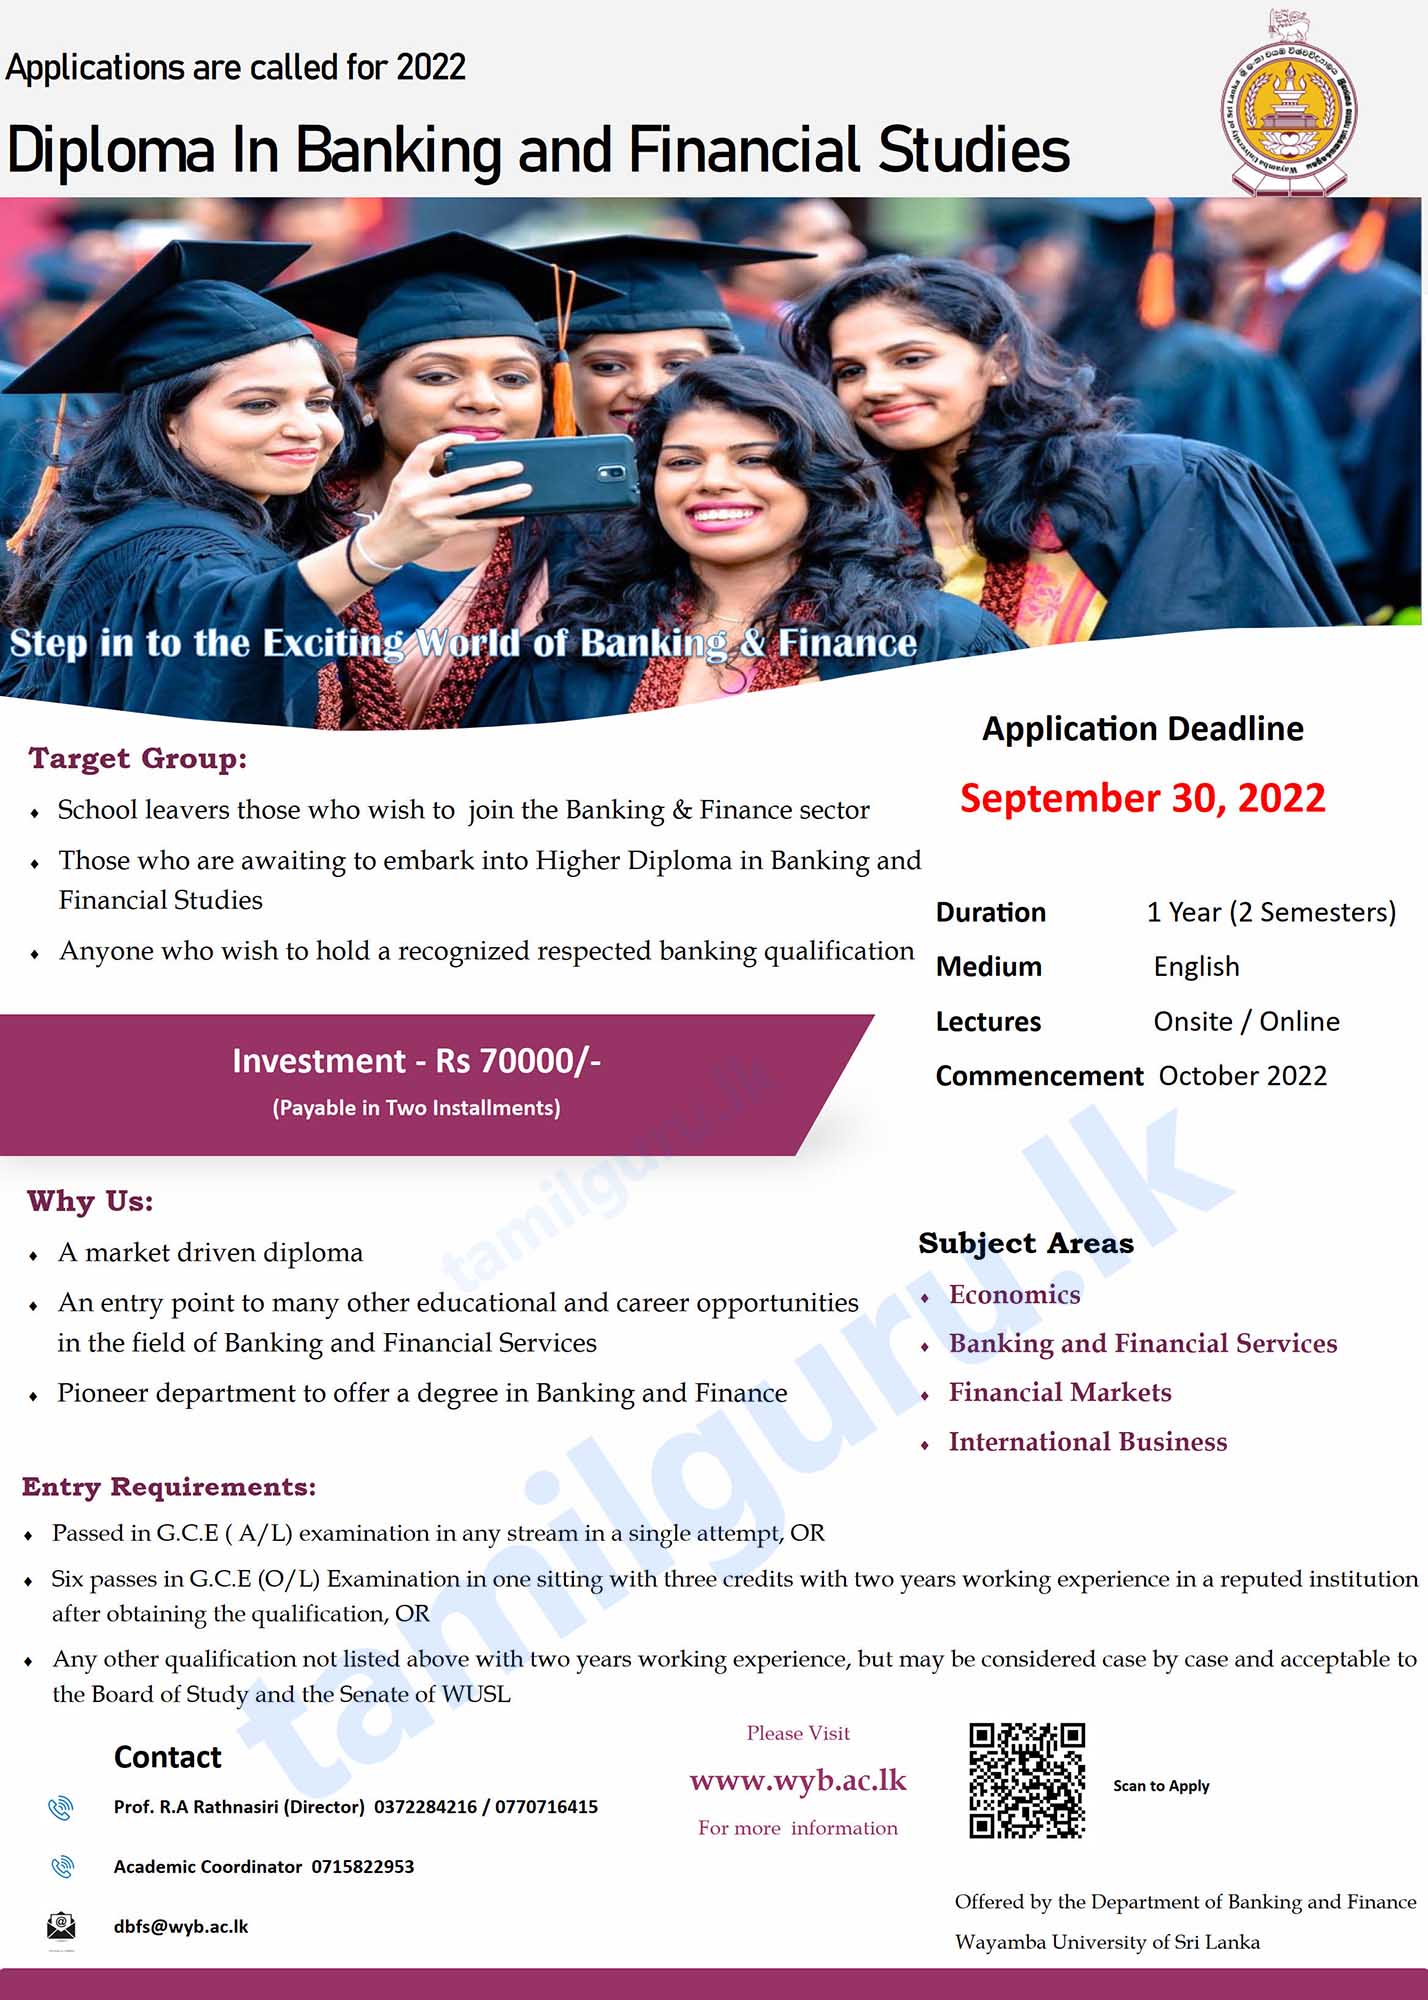 Diploma in Banking and Financial Studies (DBFS) 2022 - Wayamba University of Sri Lanka